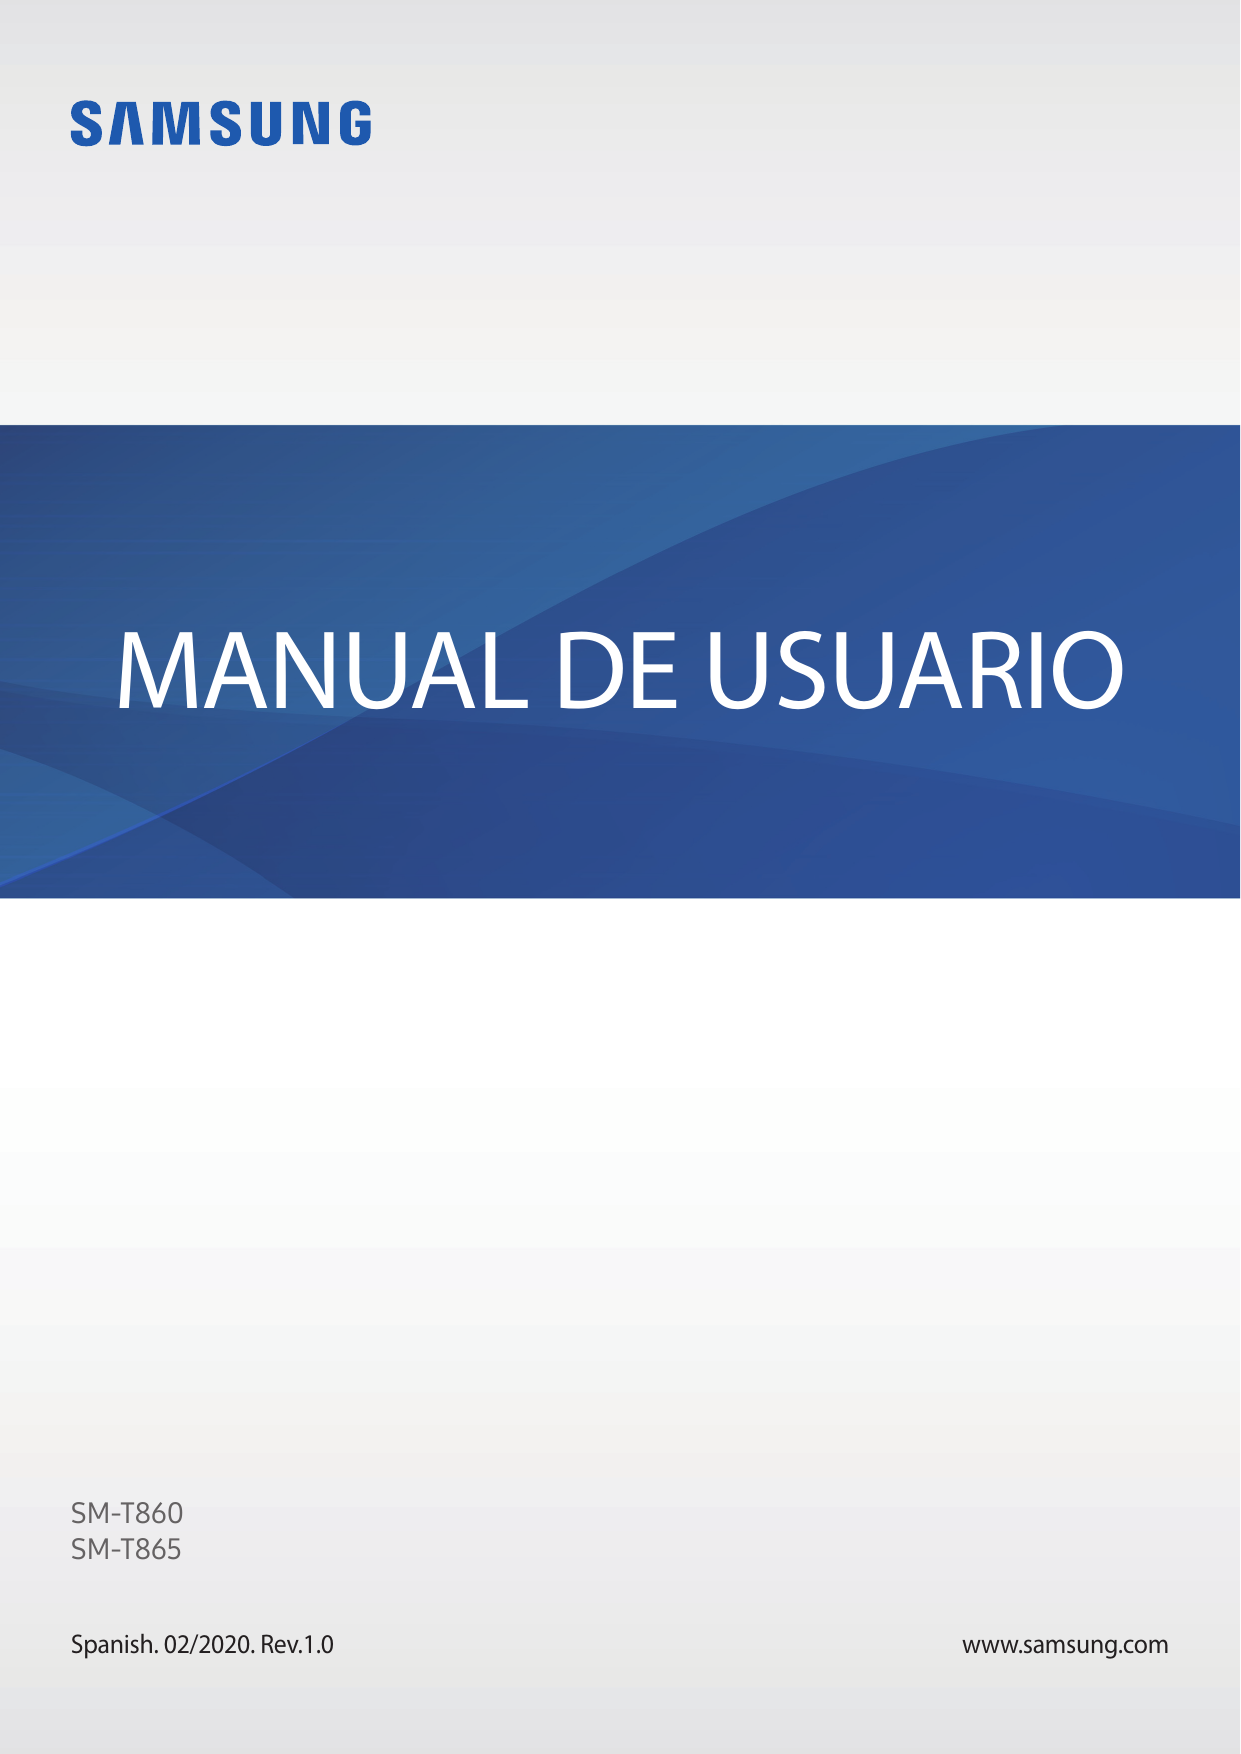 MANUAL DE USUARIOSM-T860SM-T865Spanish. 02/2020. Rev.1.0www.samsung.com